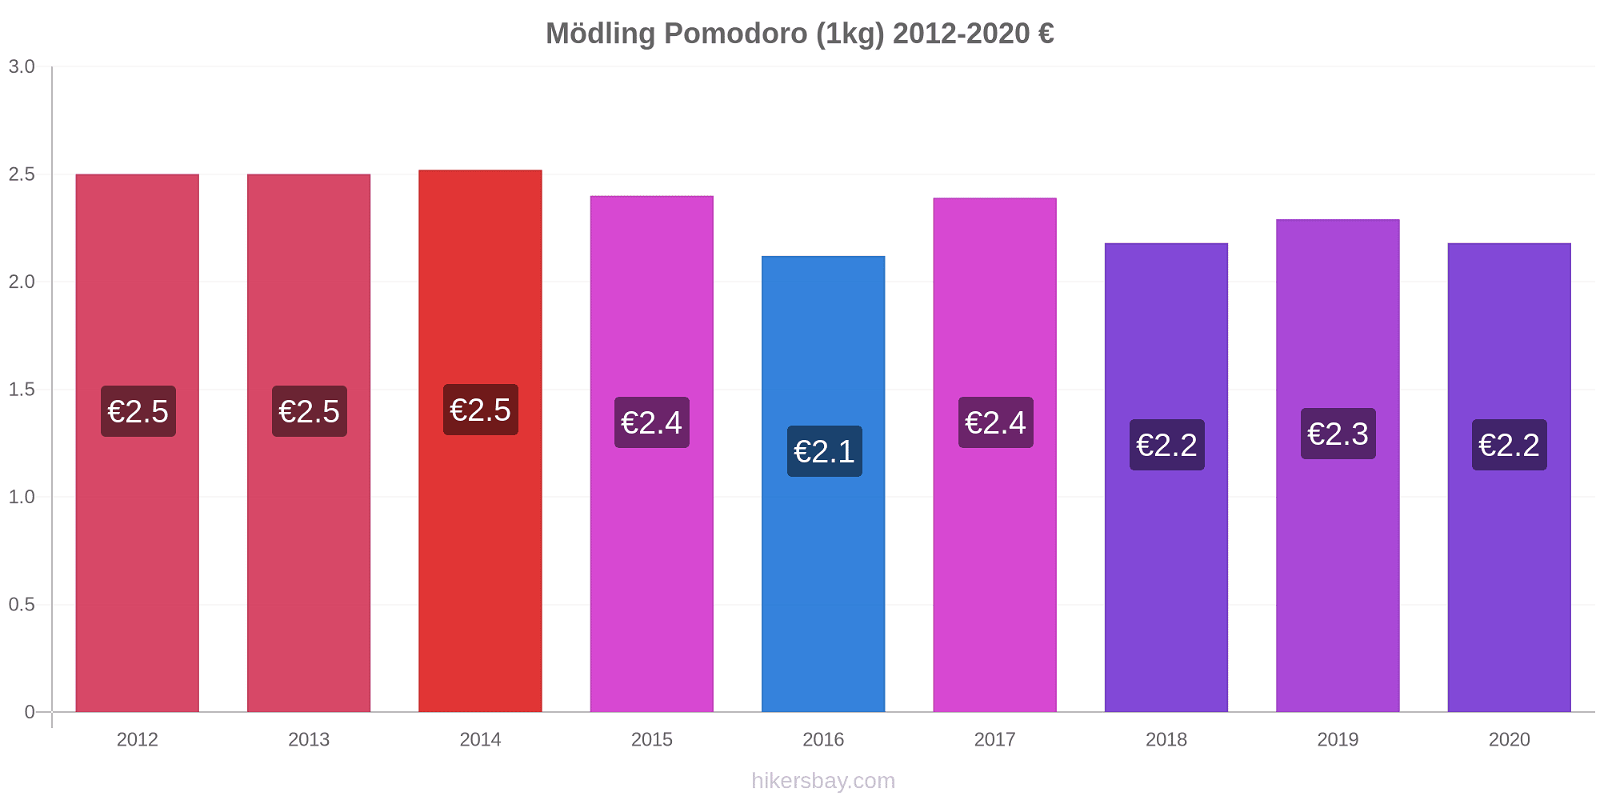 Mödling variazioni di prezzo Pomodoro (1kg) hikersbay.com